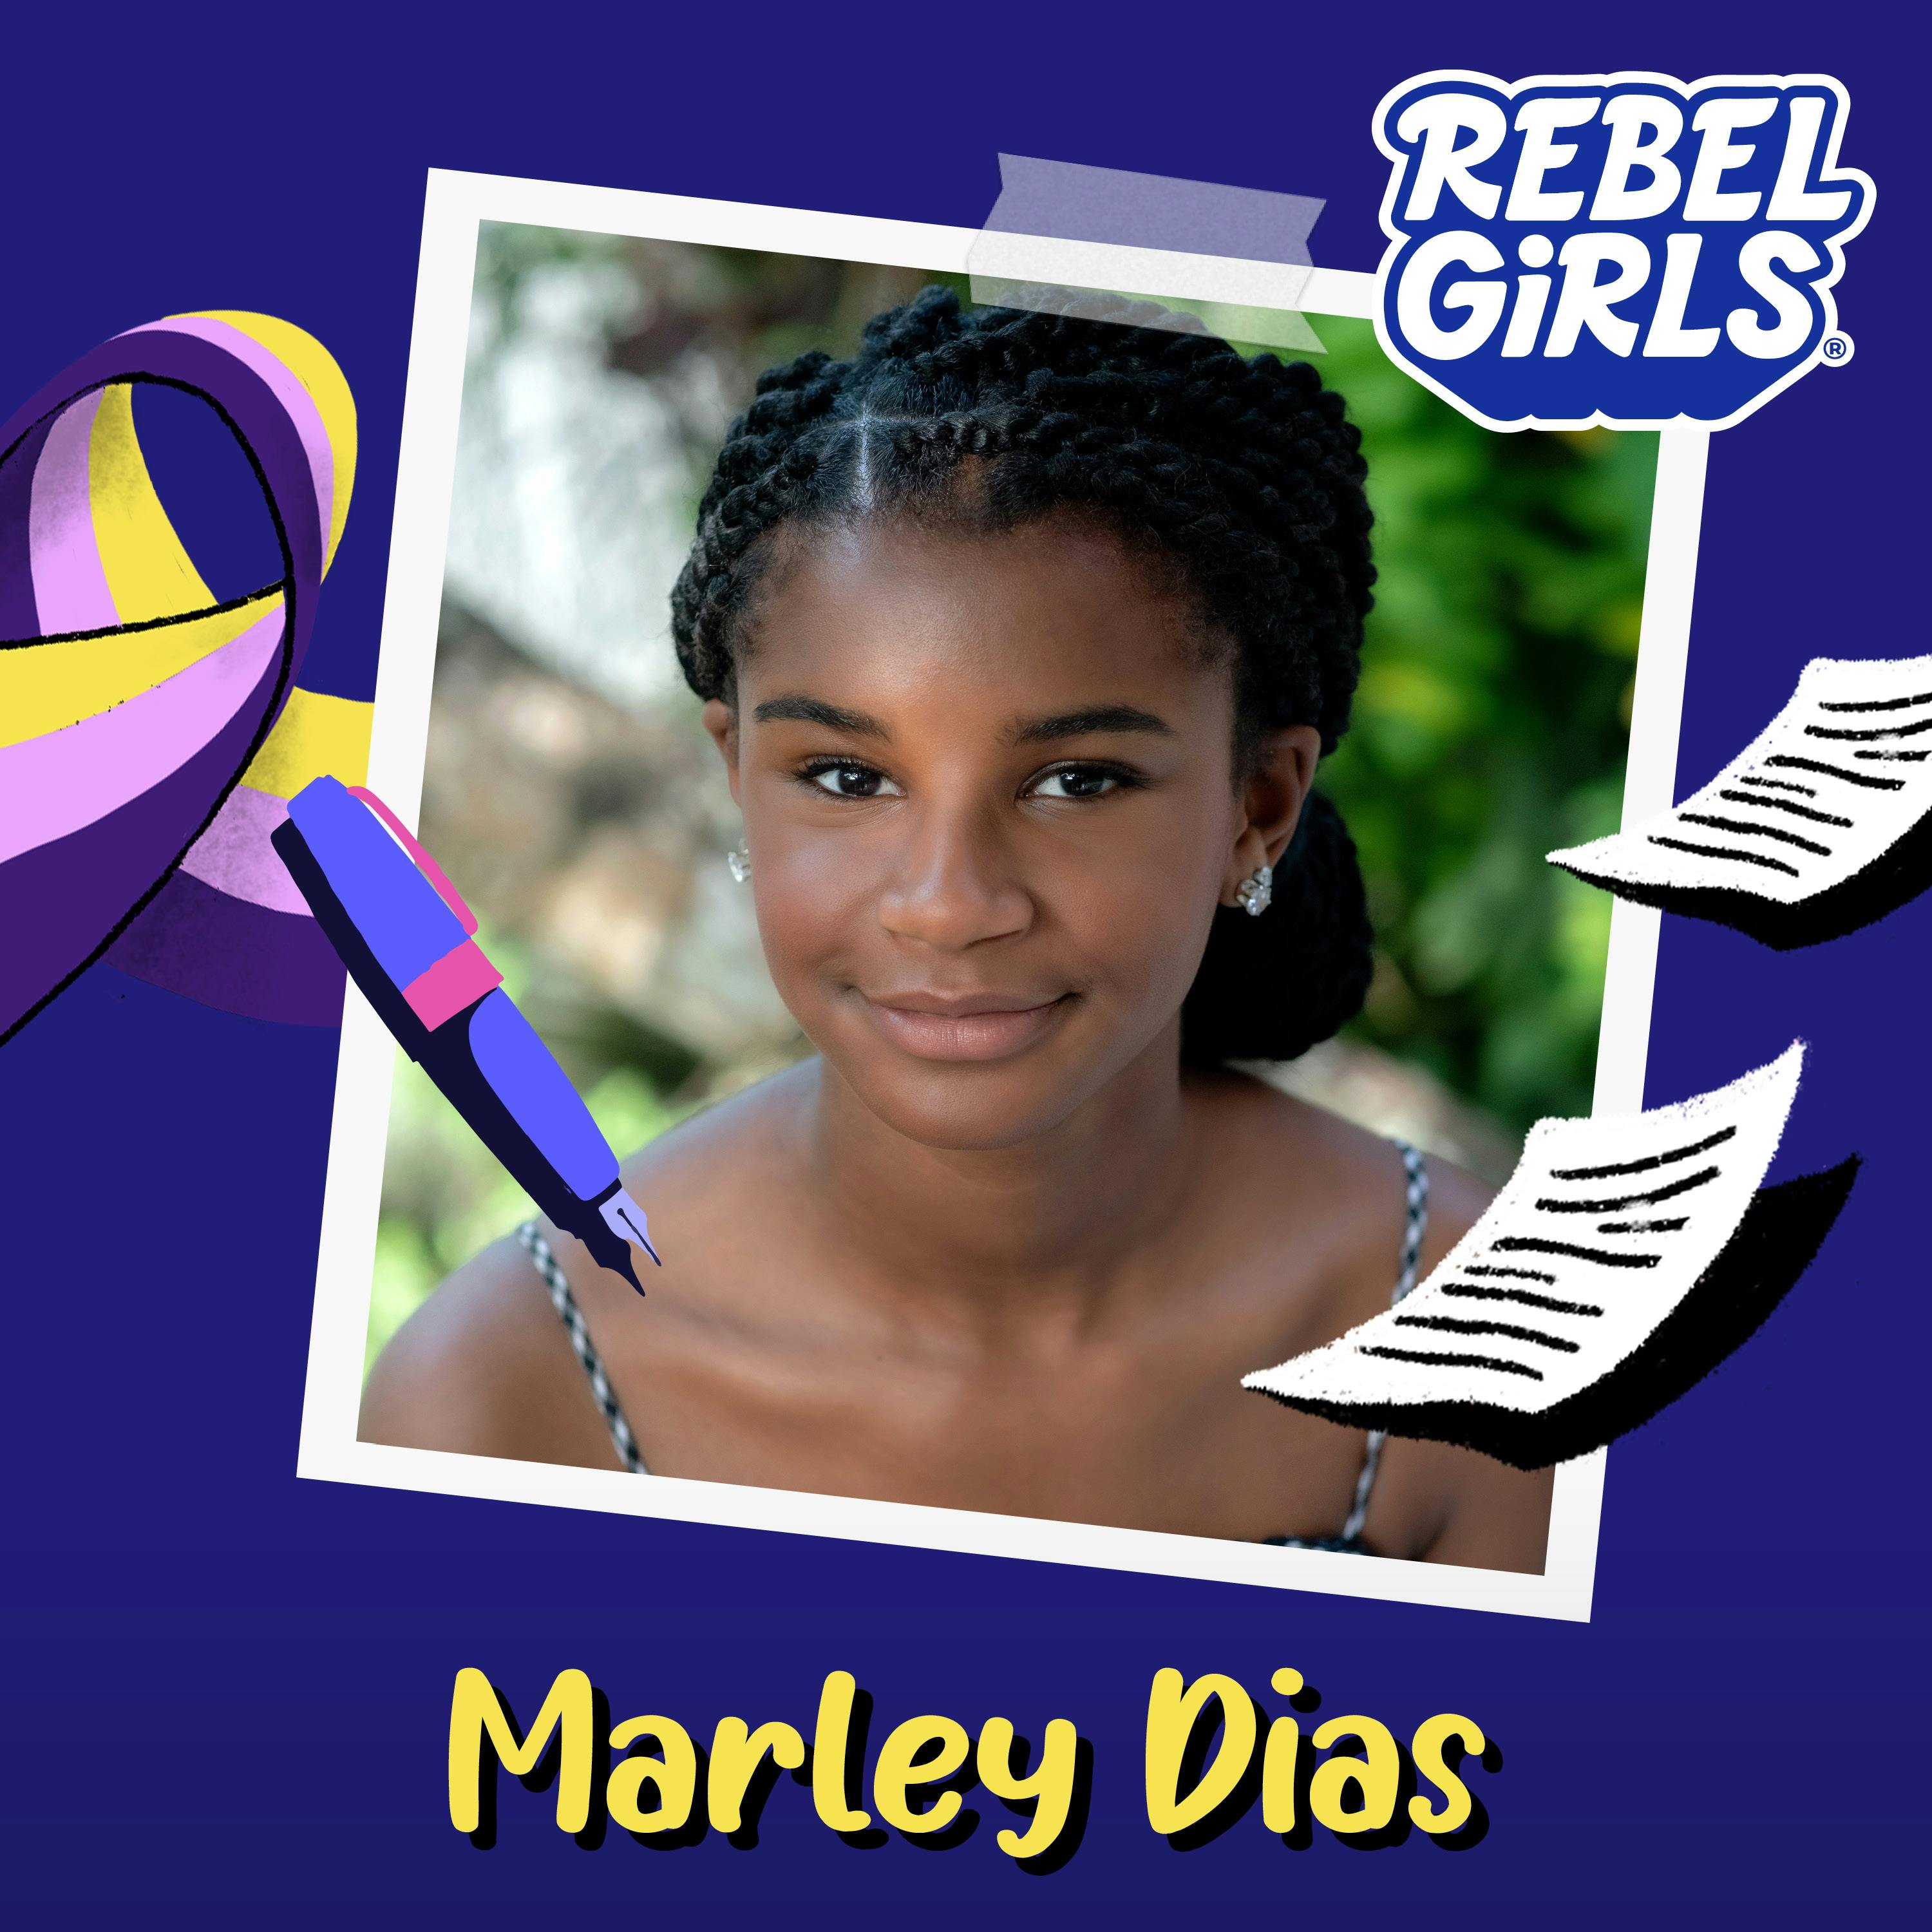 Get To Know Marley Dias